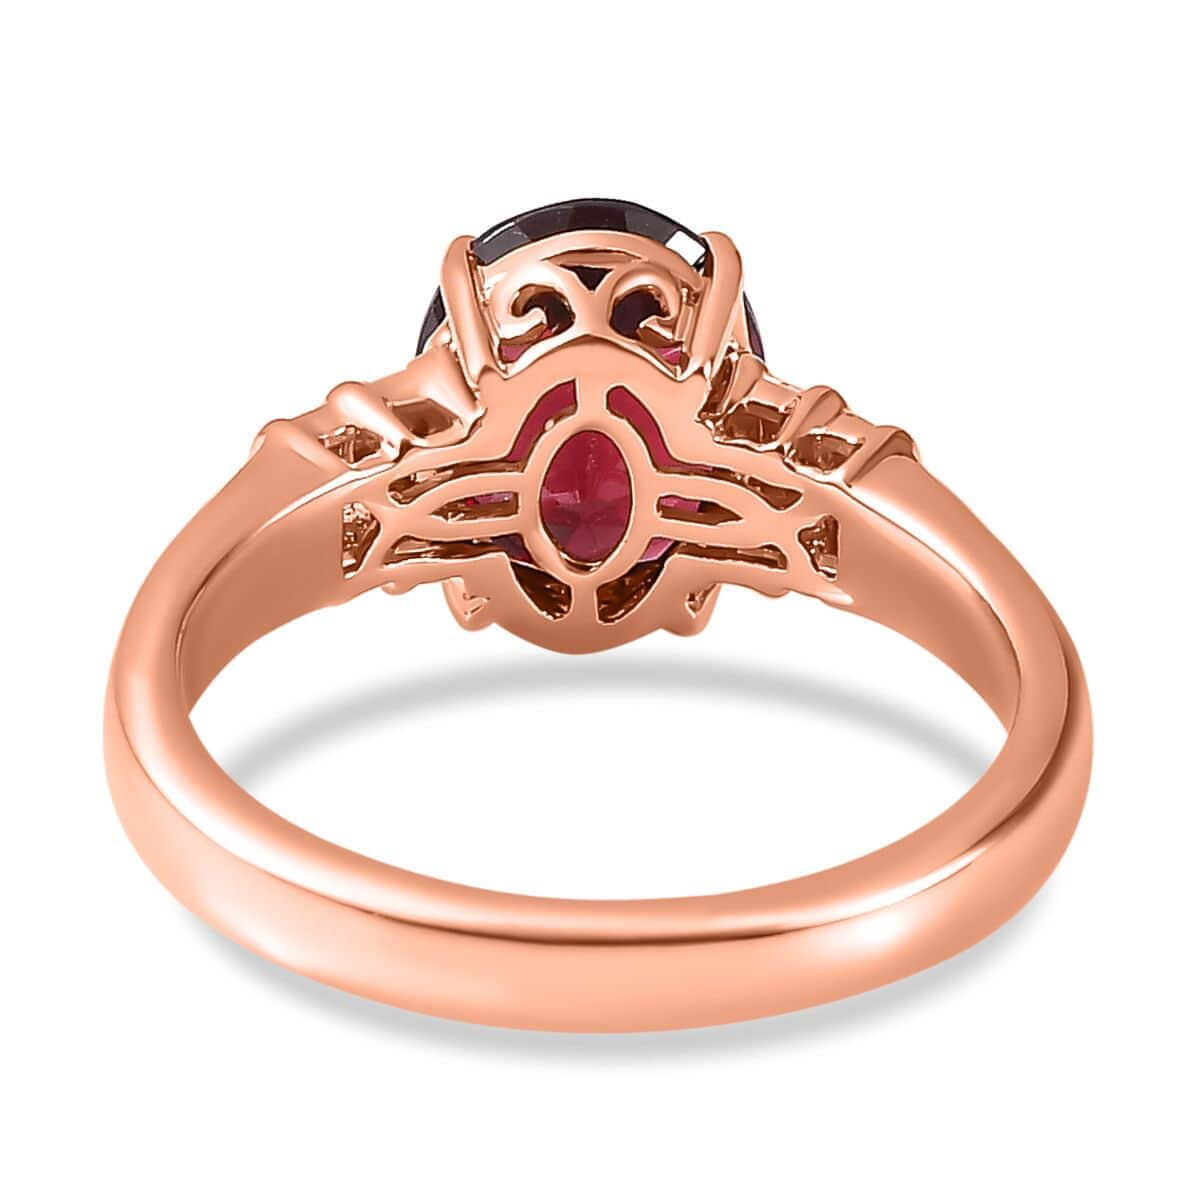 Luxoro 10K Rose Gold Premium Orissa Rhodolite Garnet and G-H I2 Diamond Ring (Size 6.0) 3.10 ctw image number 4